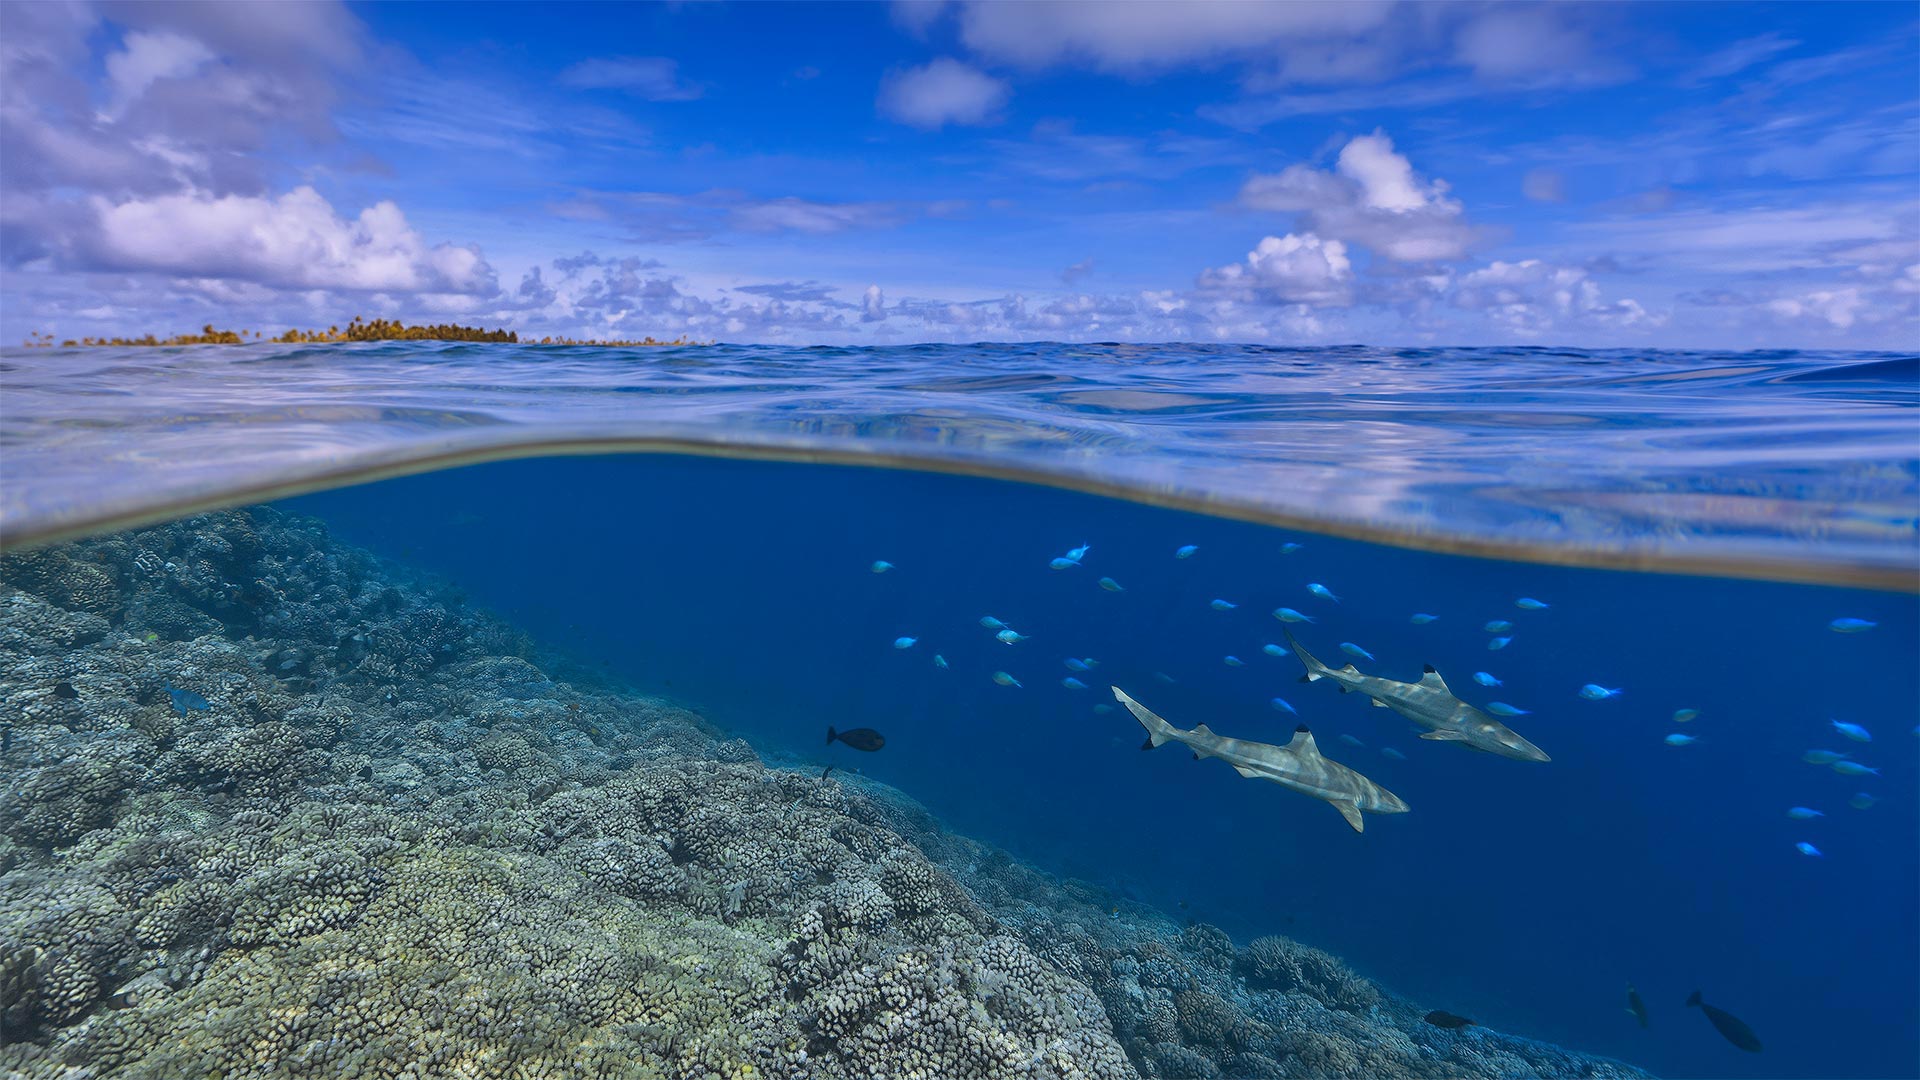 Blacktip reef sharks off the coast of Tahiti, French Polynesia - Paul Mckenzie